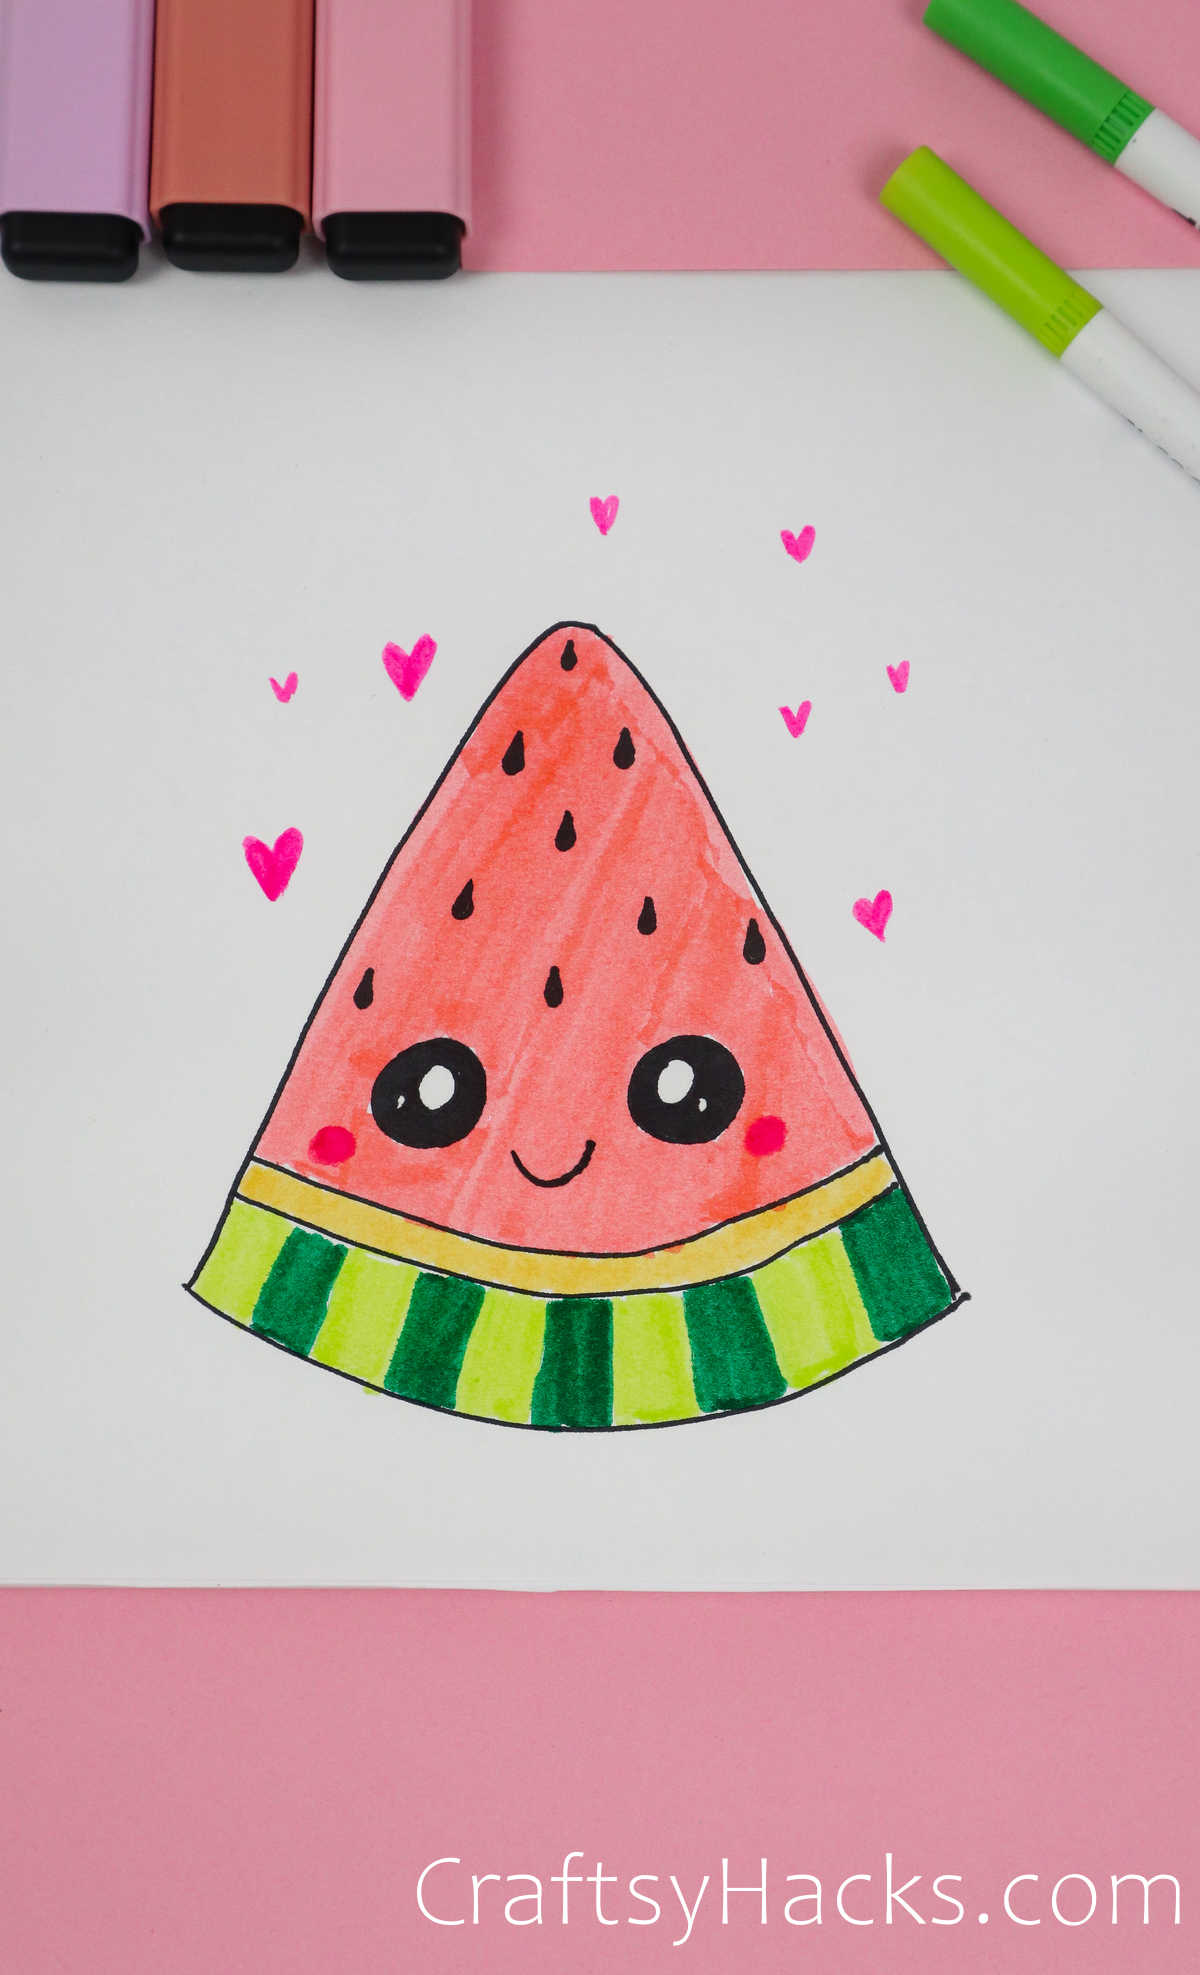 a picture of drawn watermelon slice